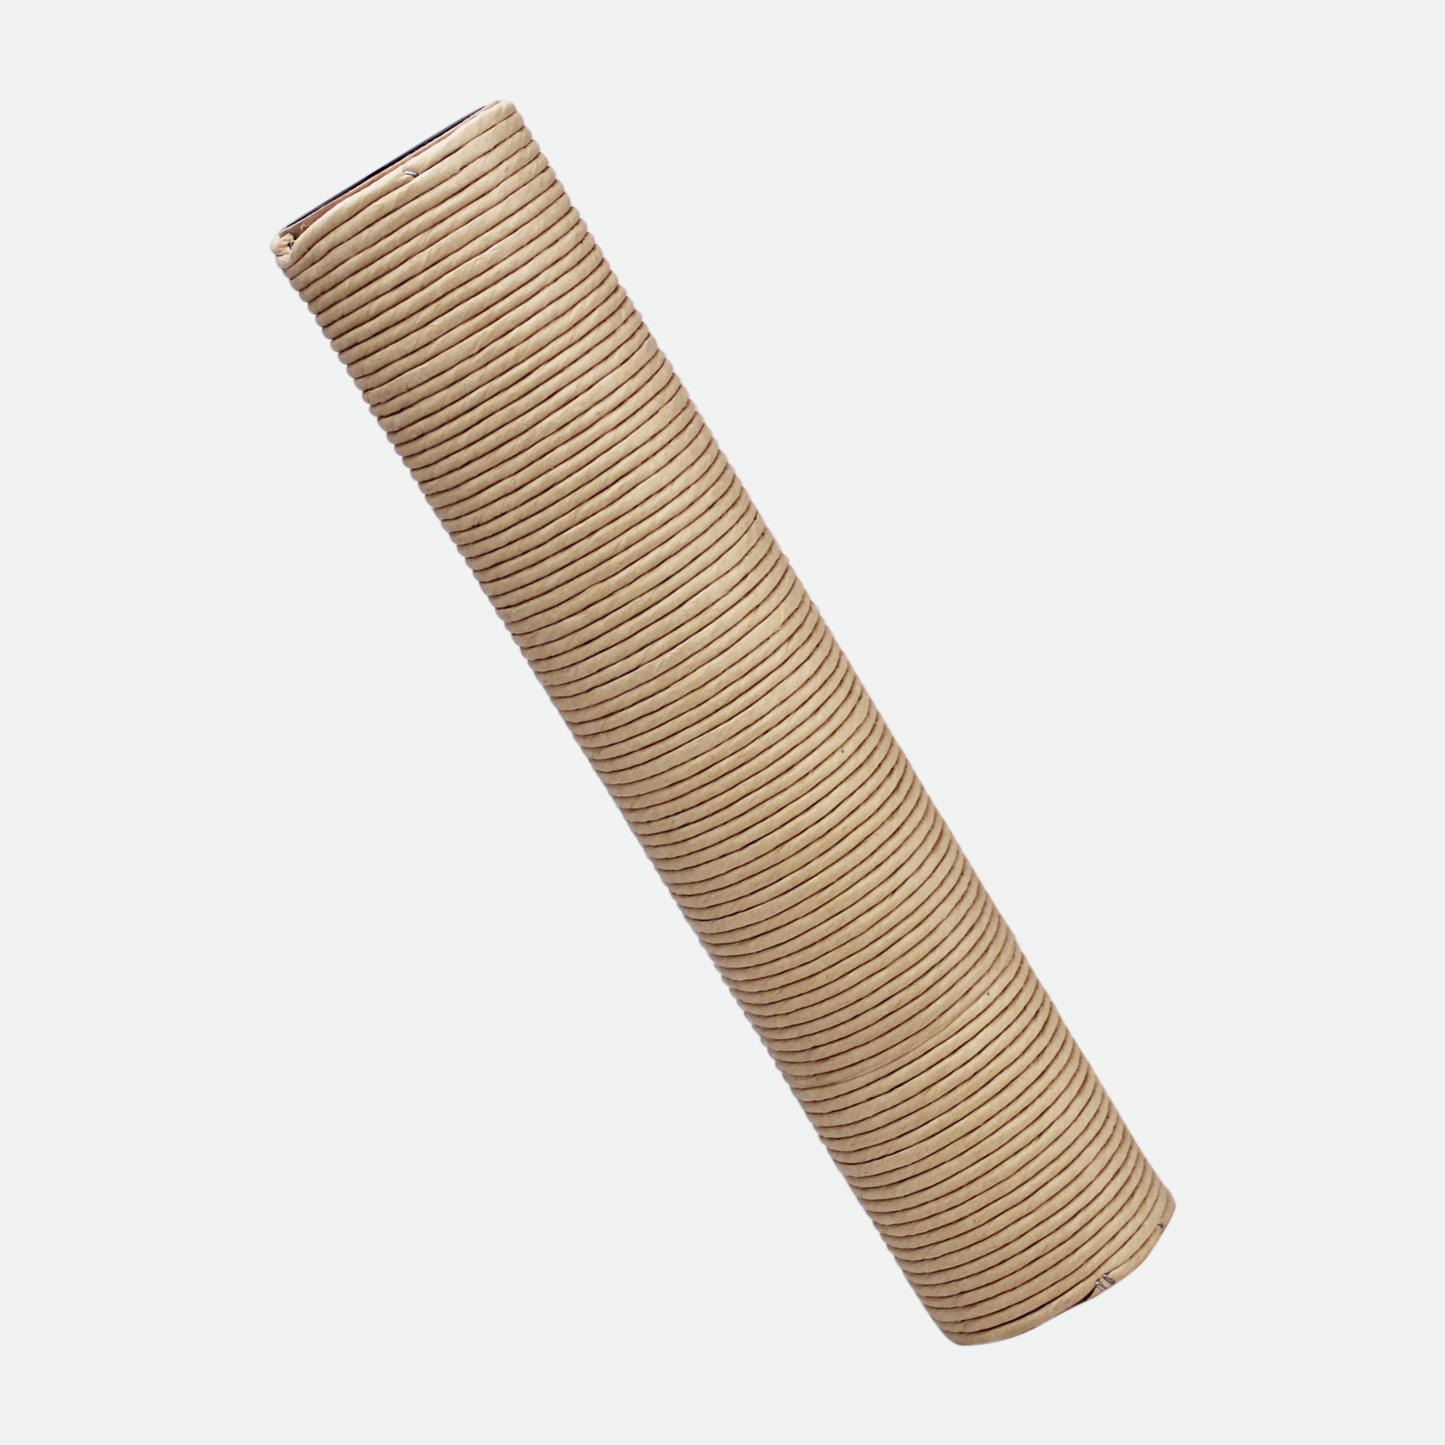 Additional paper rope scratcher post for Katt3EVO Tower, beige